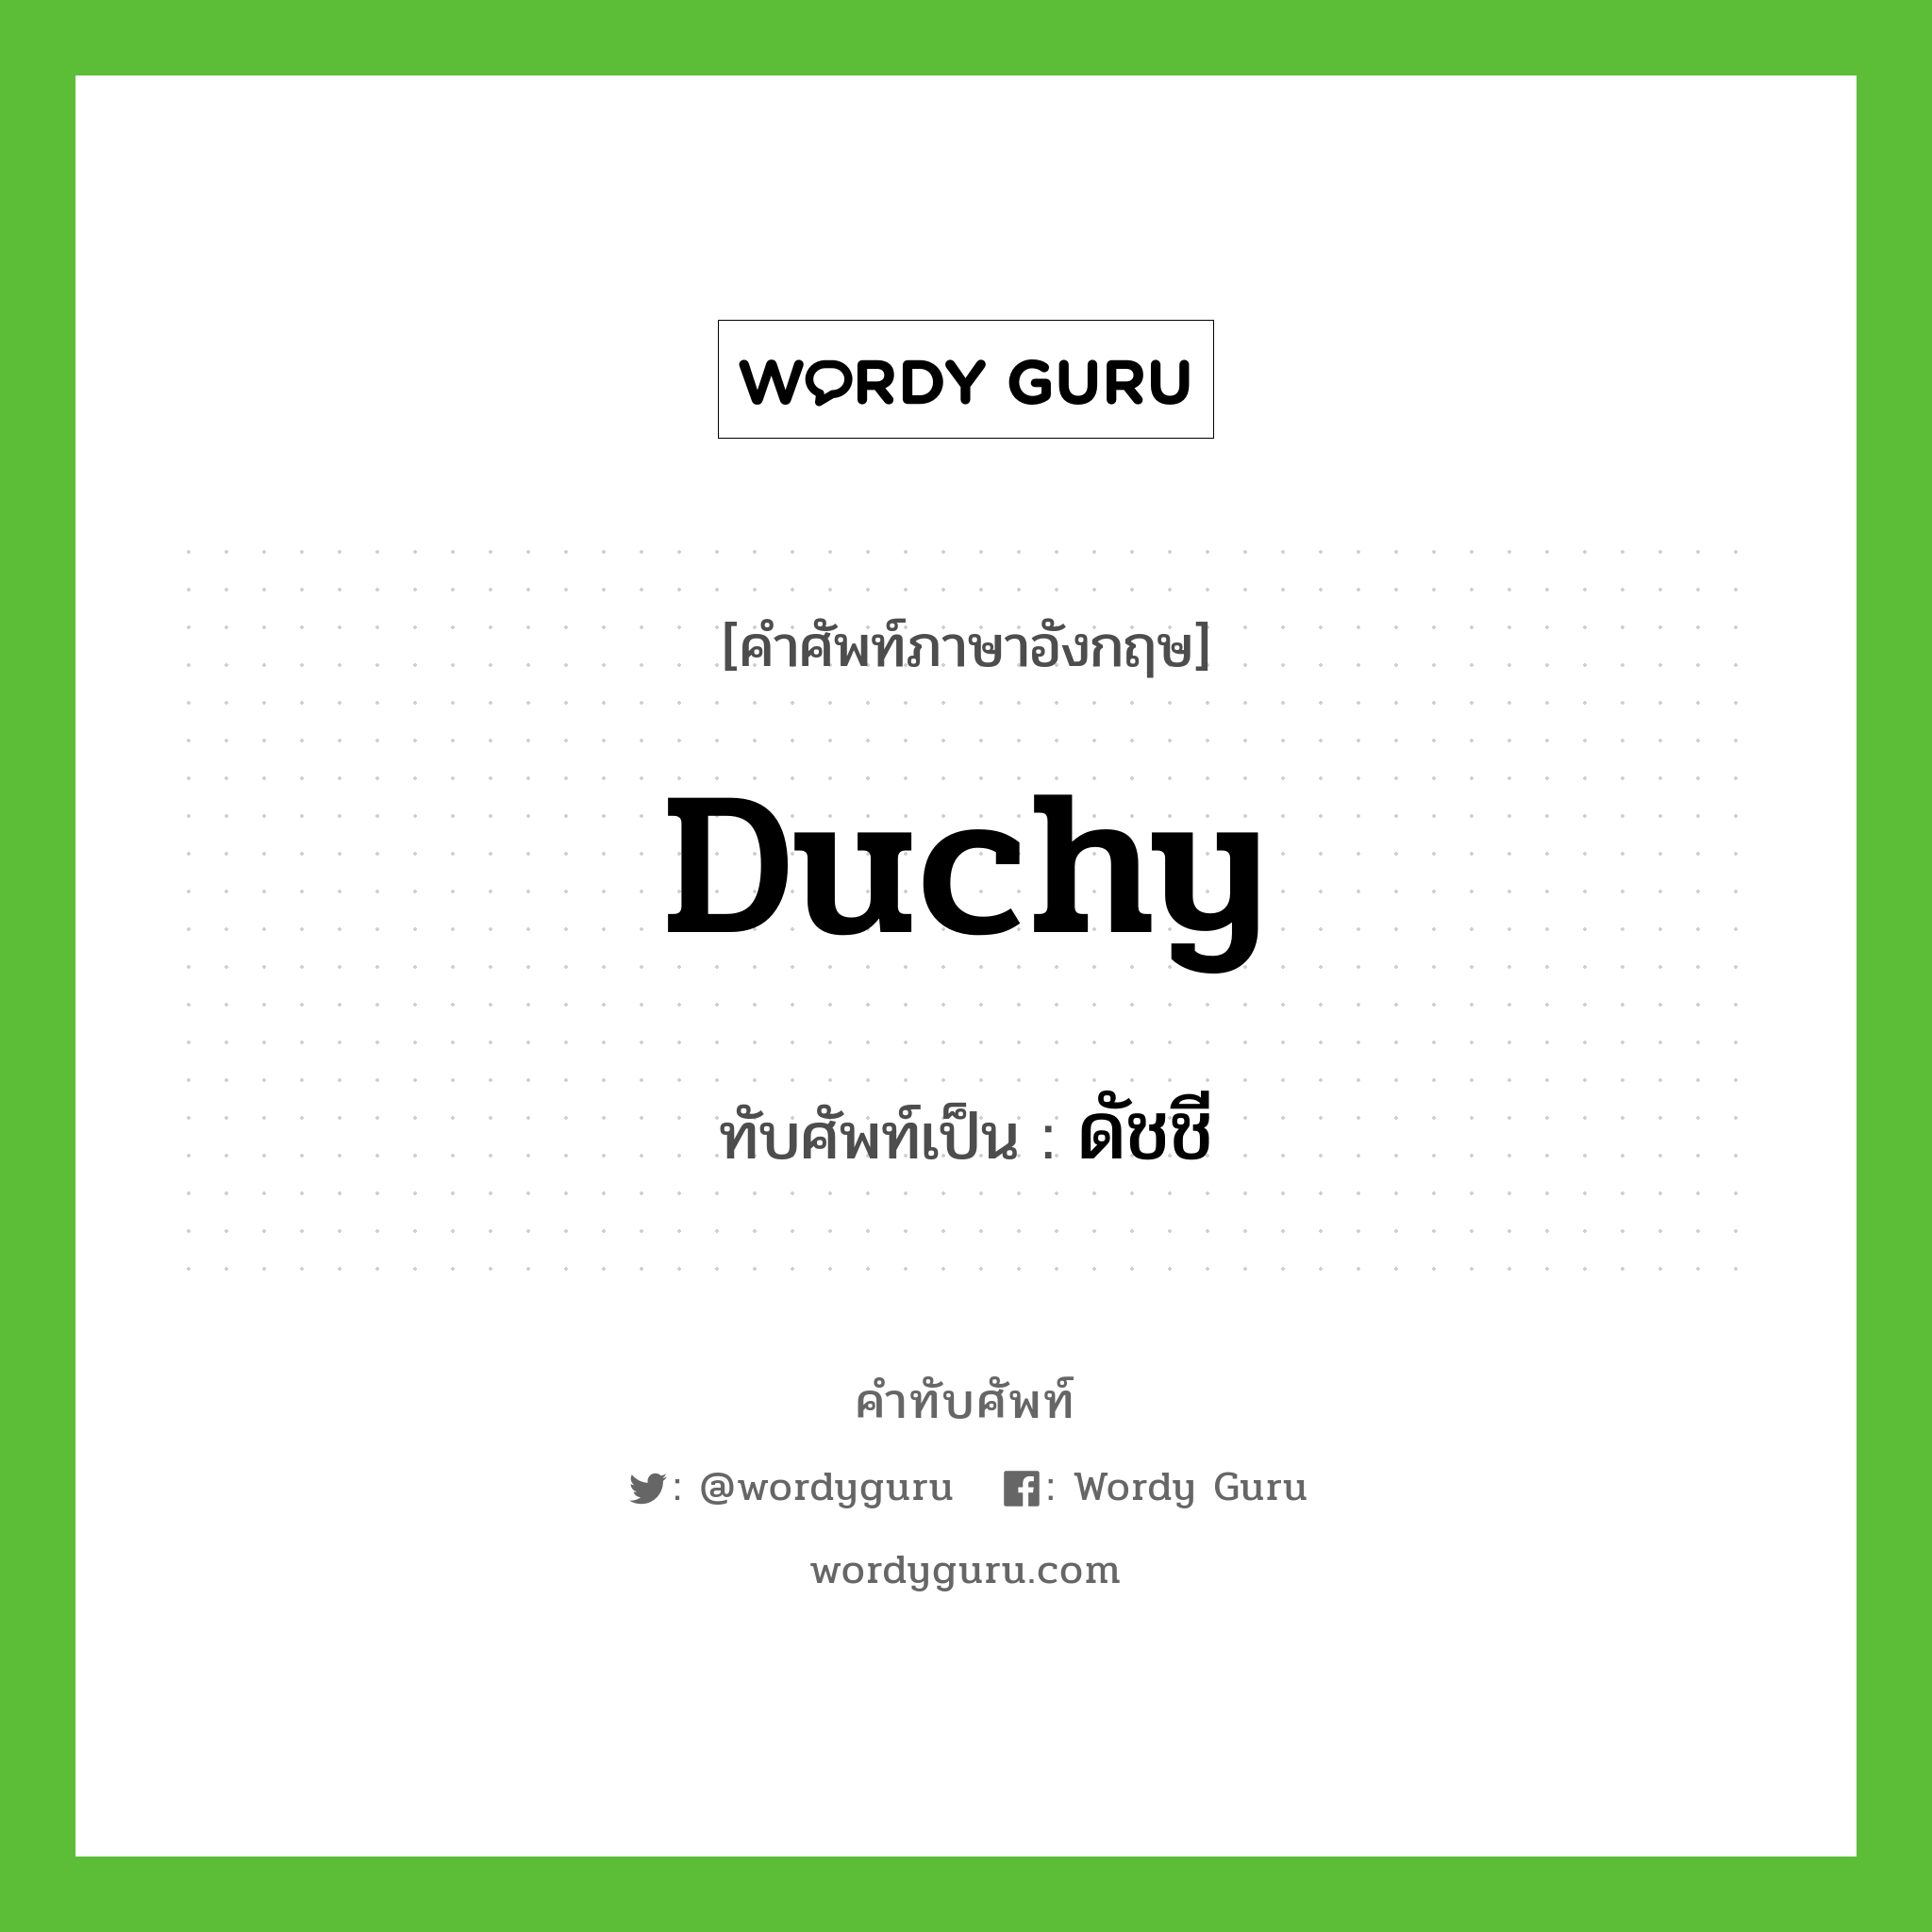 duchy เขียนเป็นคำไทยว่าอะไร?, คำศัพท์ภาษาอังกฤษ duchy ทับศัพท์เป็น ดัชชี